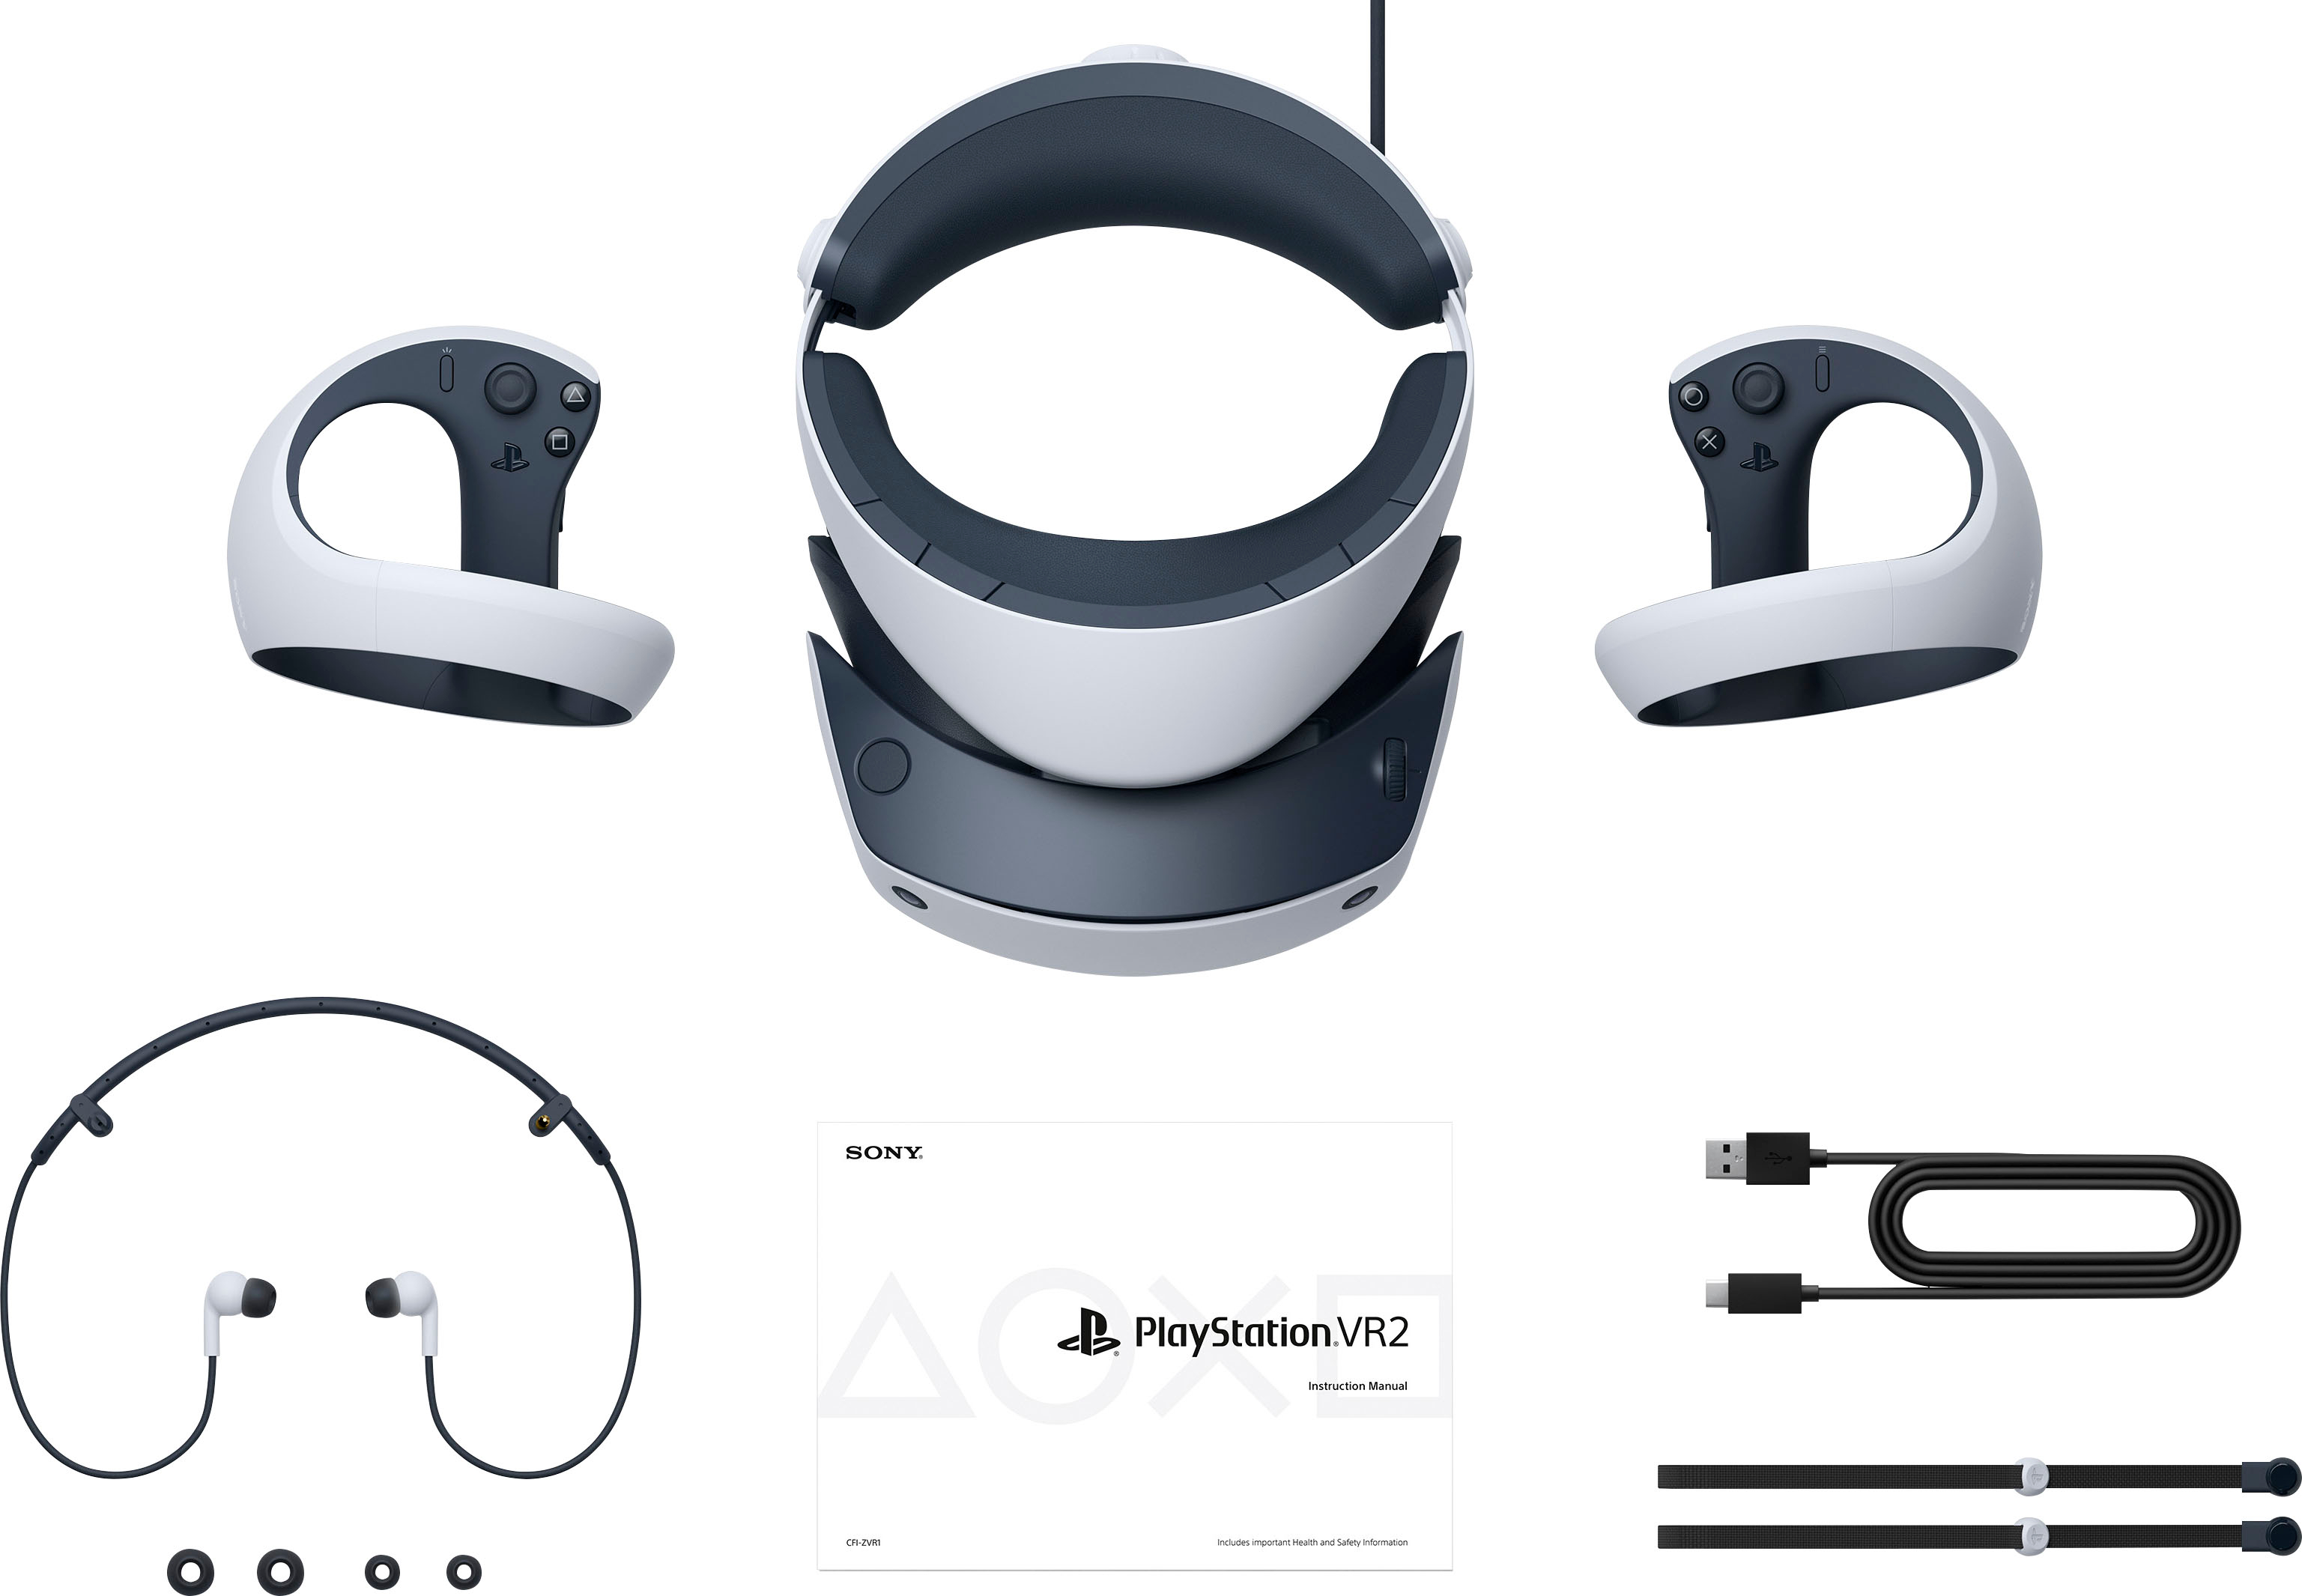 Análise] PlayStation VR2: vale a pena?